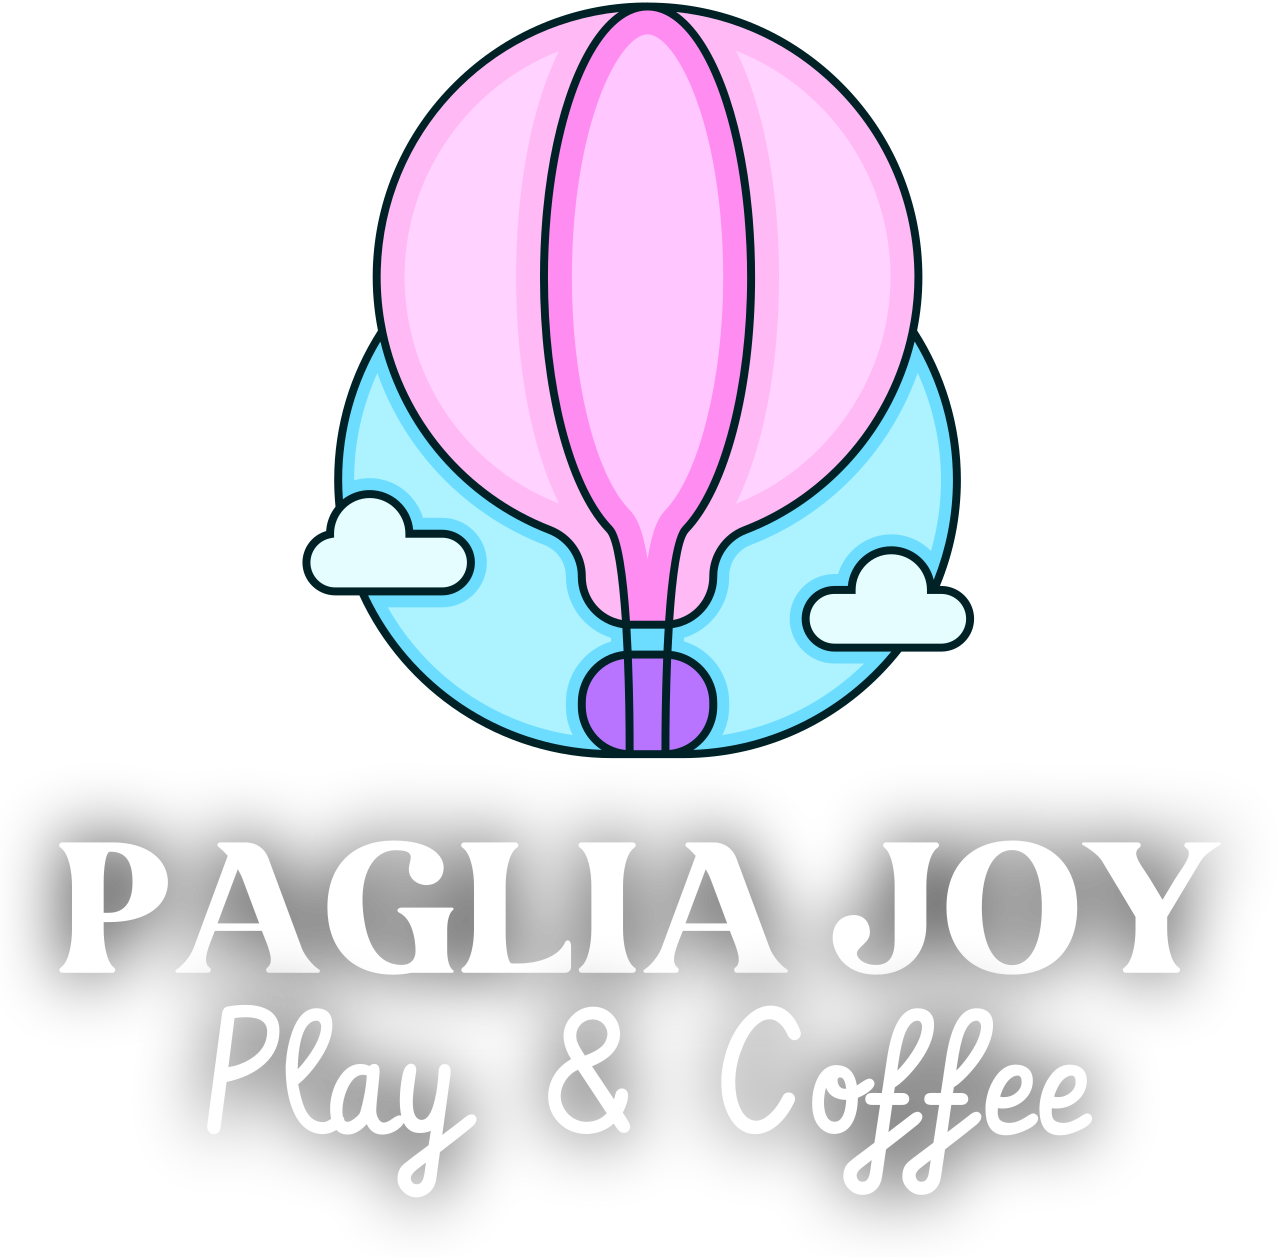 Paglia Joy's logo